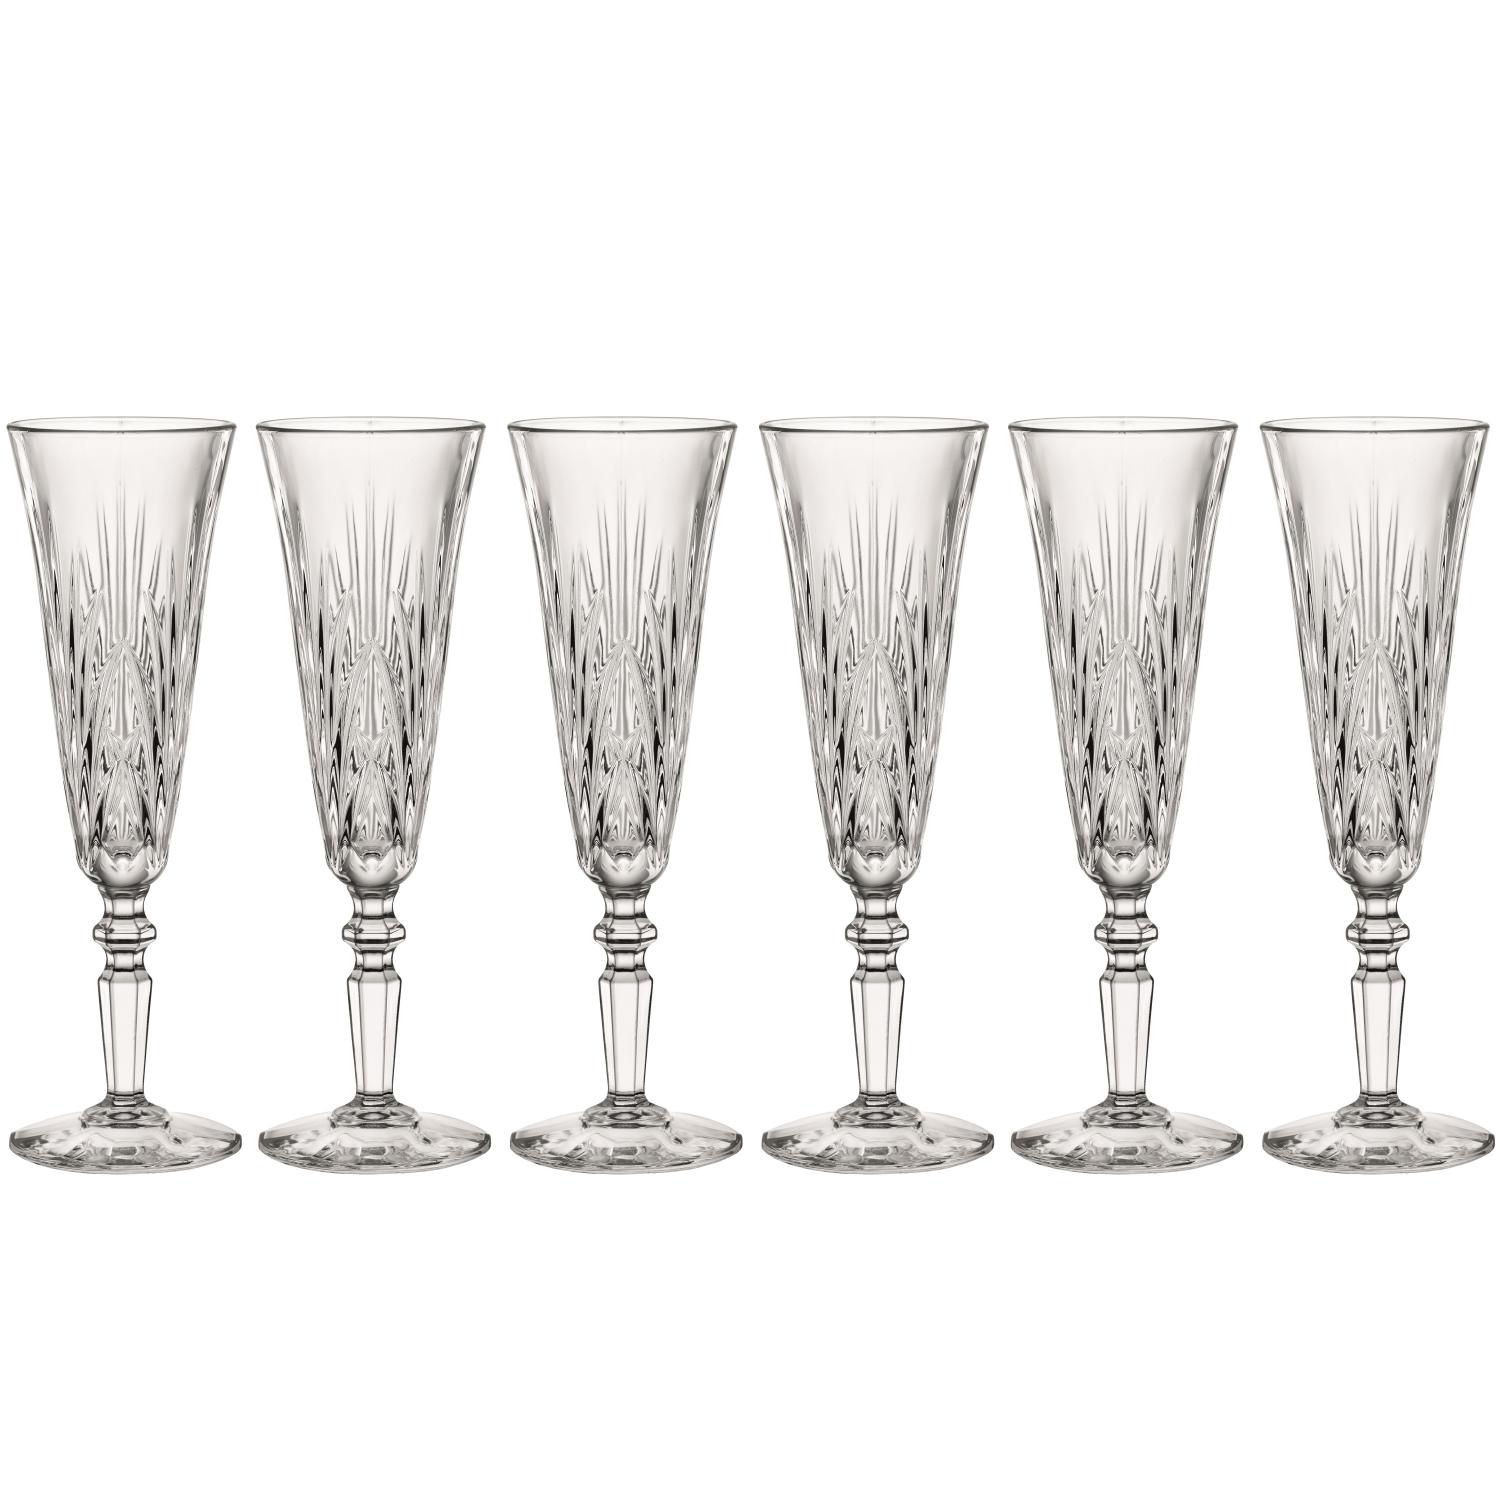 6 бокалов для шампанского Nachtmann Palais Champagne Taper 140 мл (арт. 92953)